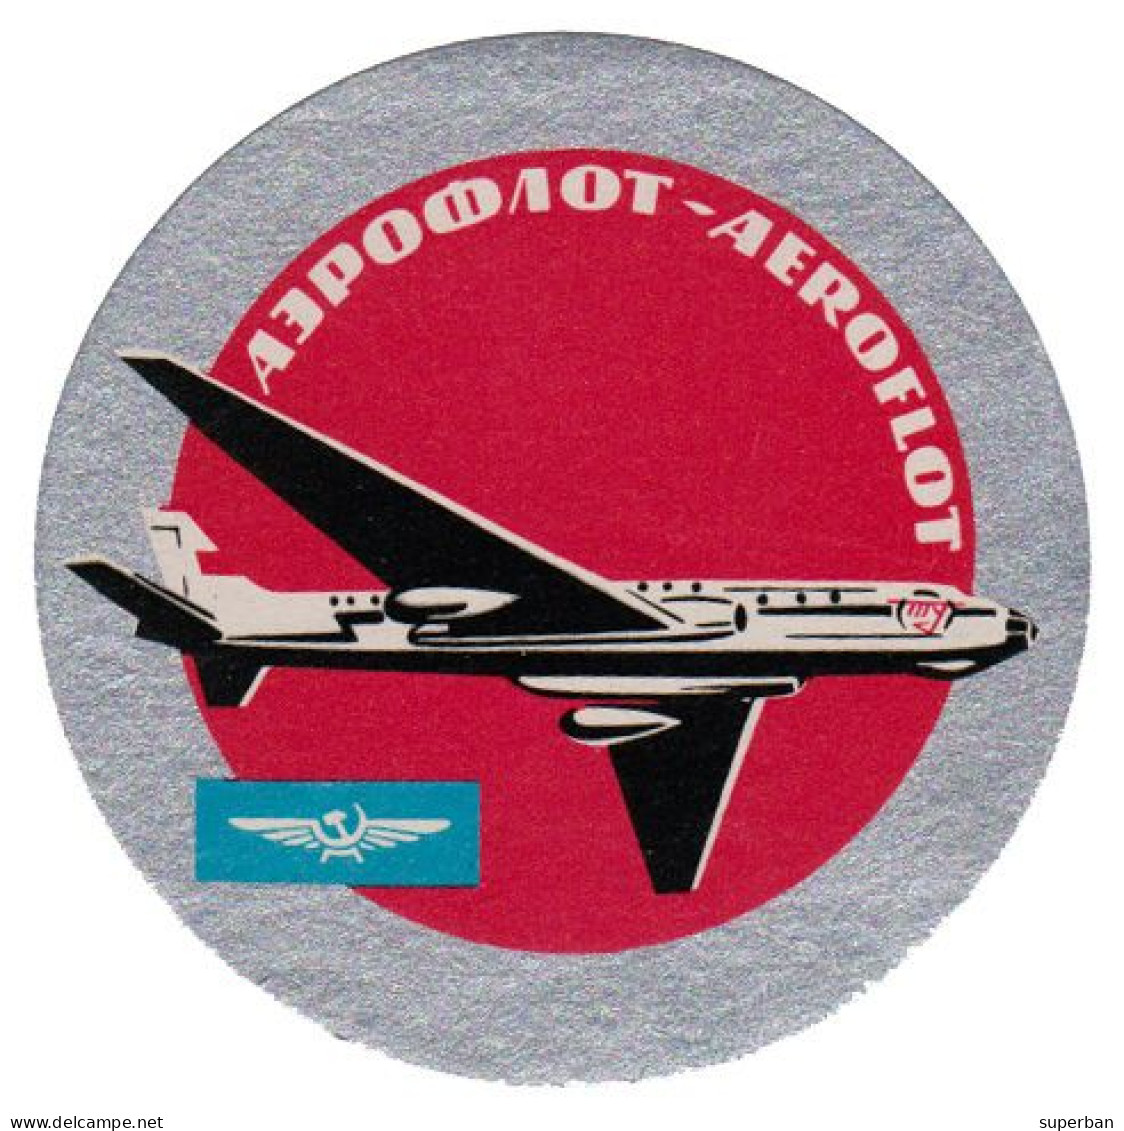 AVIATION CIVILE - ENV. 1960 - 1965 - VIGNETTE / ÉTIQUETTE PUBLICITAIRE : COMPAGNIE AEROFLOT / U.S.S.R. - RRR ! (an481) - Aufklebschilder Und Gepäckbeschriftung